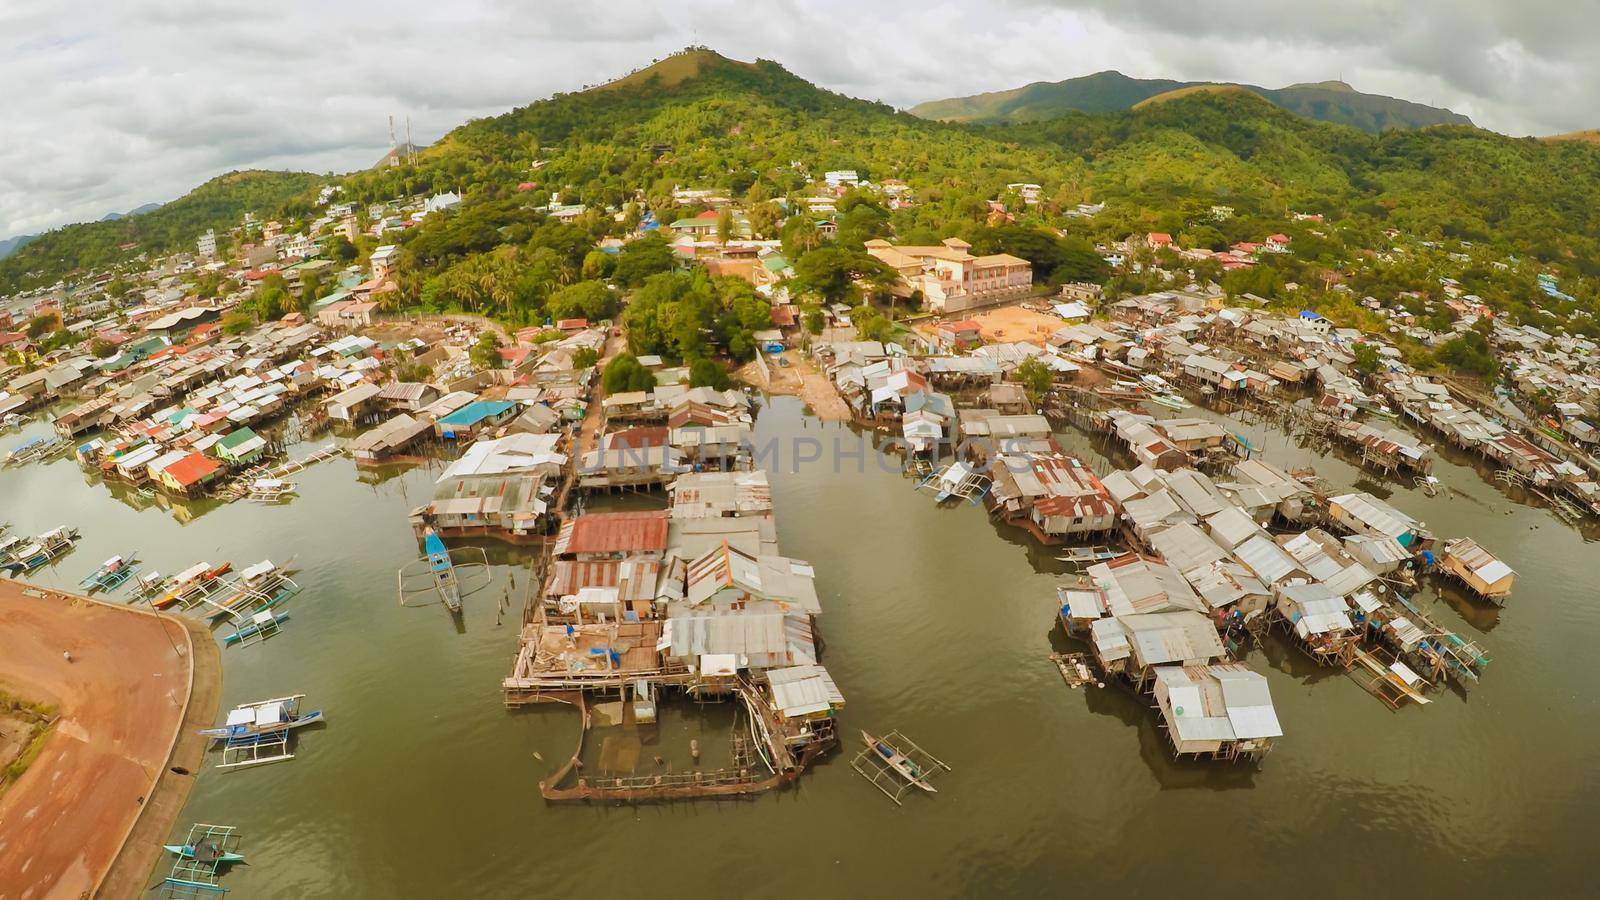 Philippine slums on the beach. Poor area of the city. Coron. Palawan. Philippines